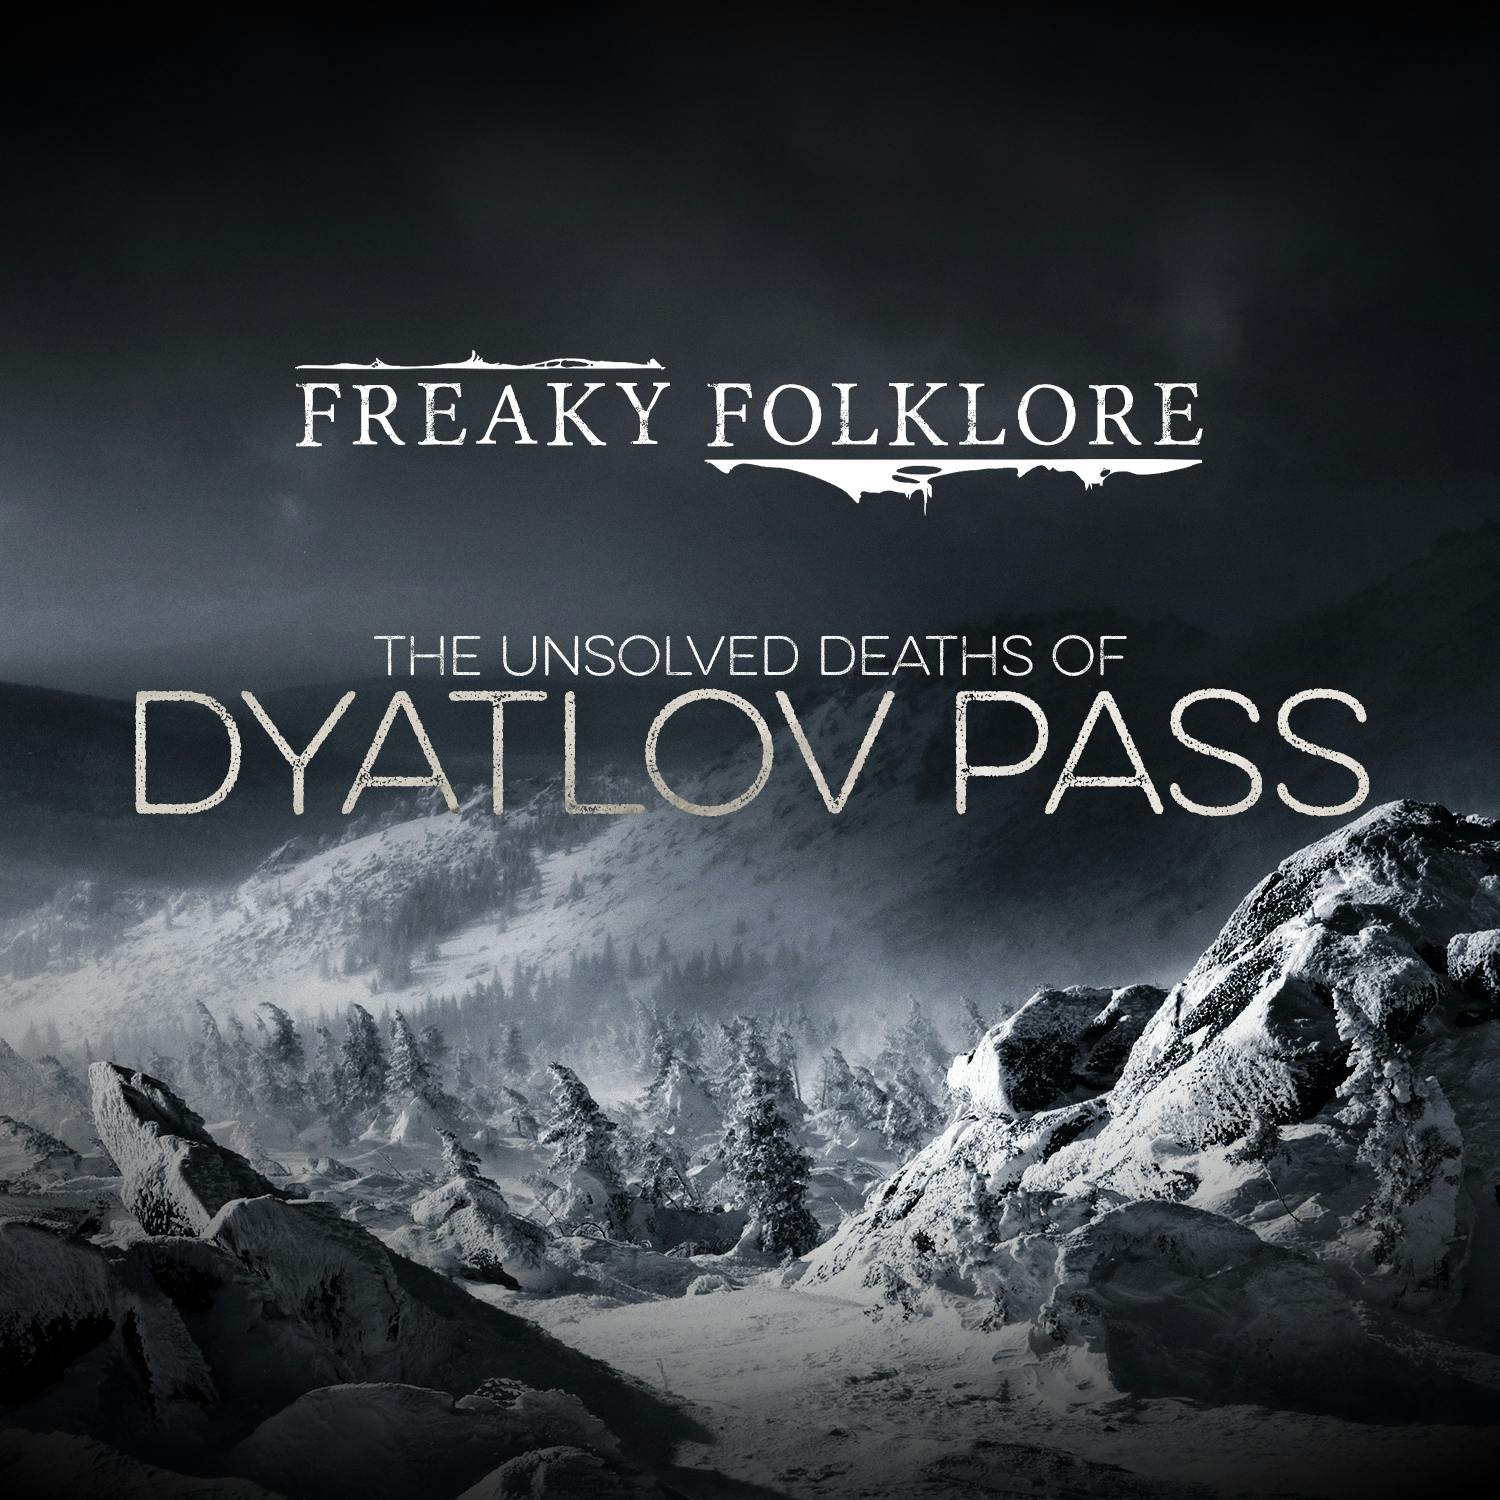 The DISTURBING Deaths of Dyatlov Pass (Unsolved Mysteries)